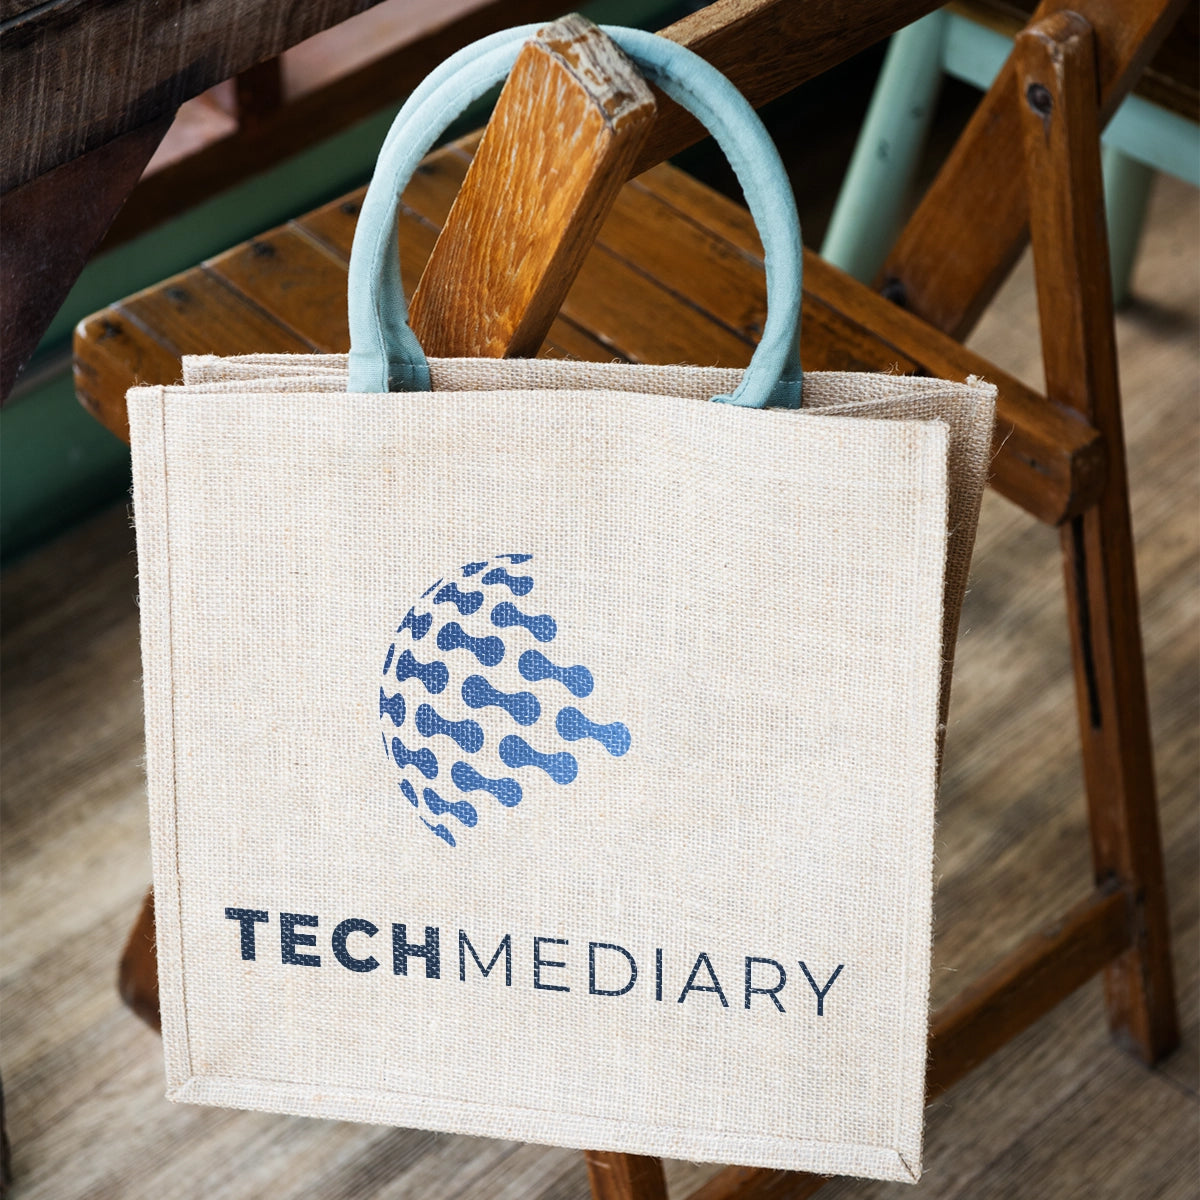 techmediary.com